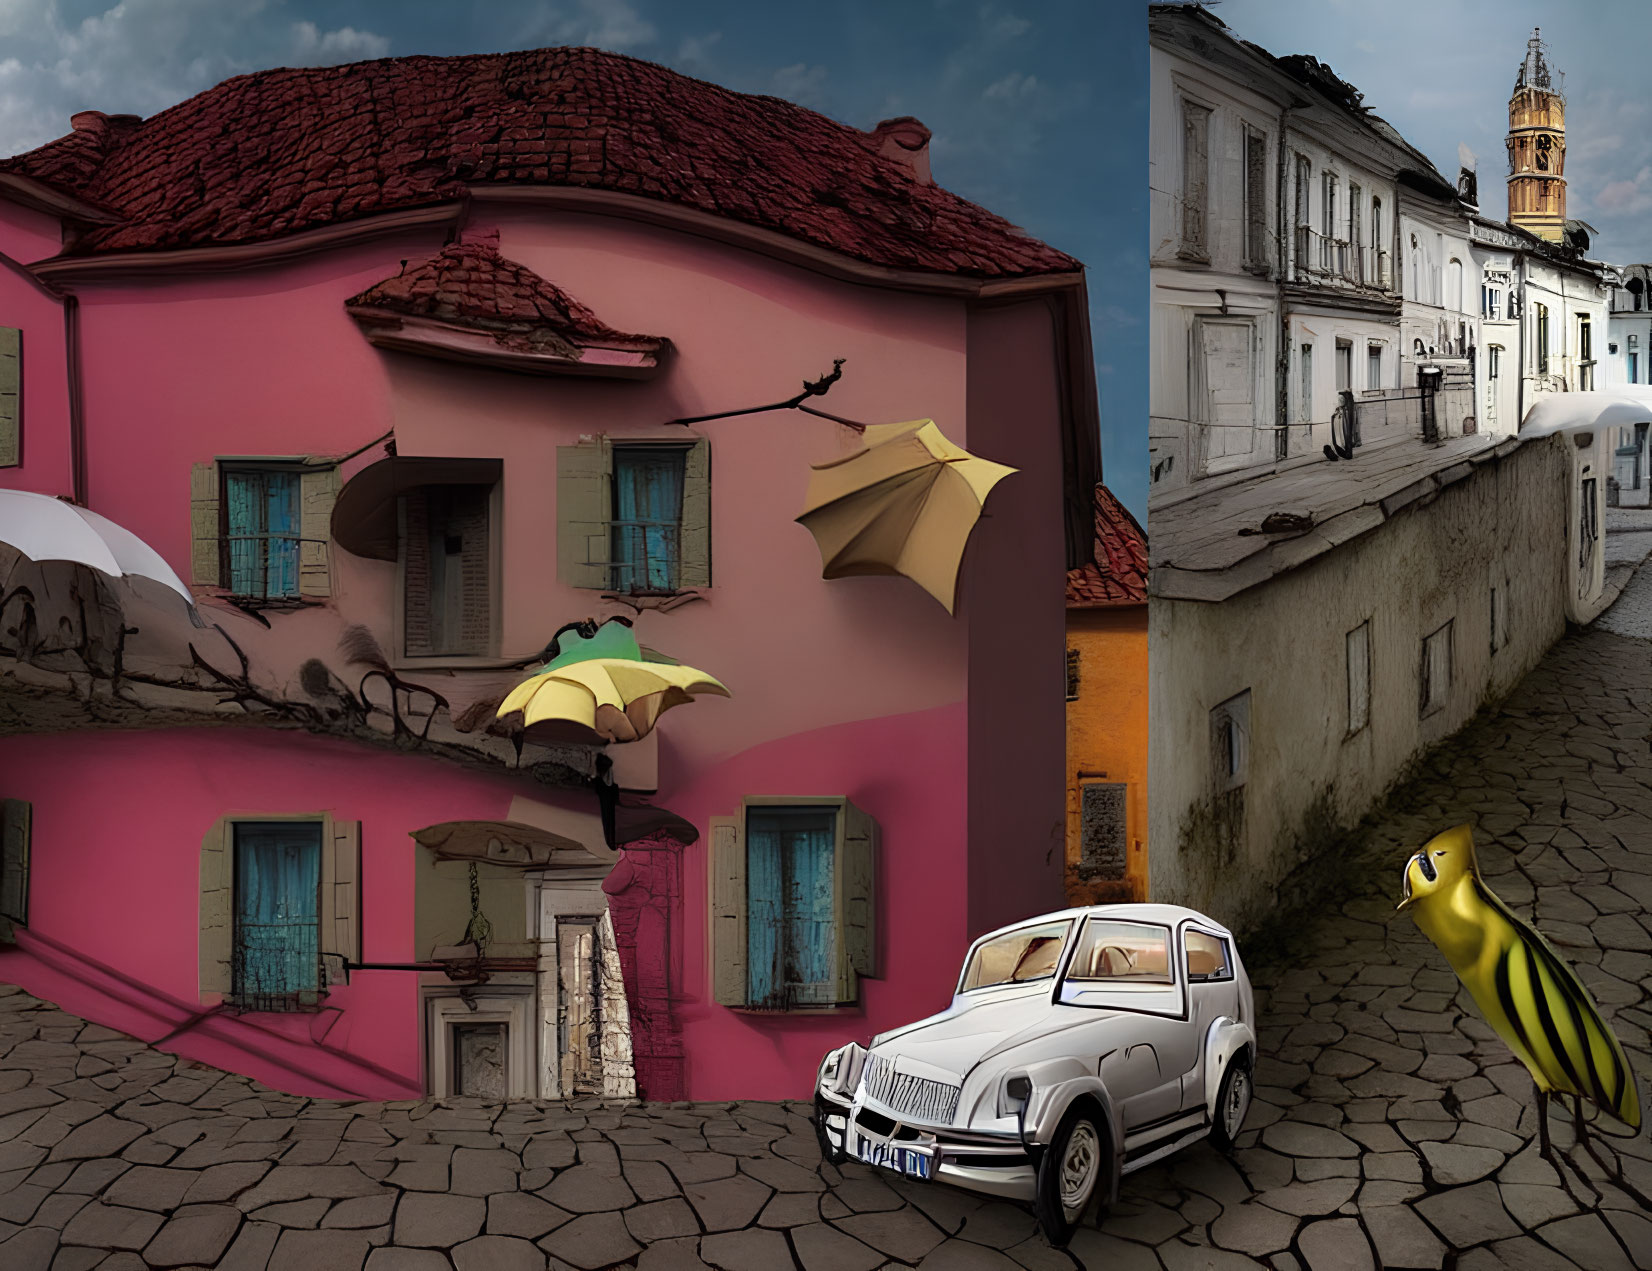 Surreal pink building, flying banana umbrellas, vintage car, traditional street